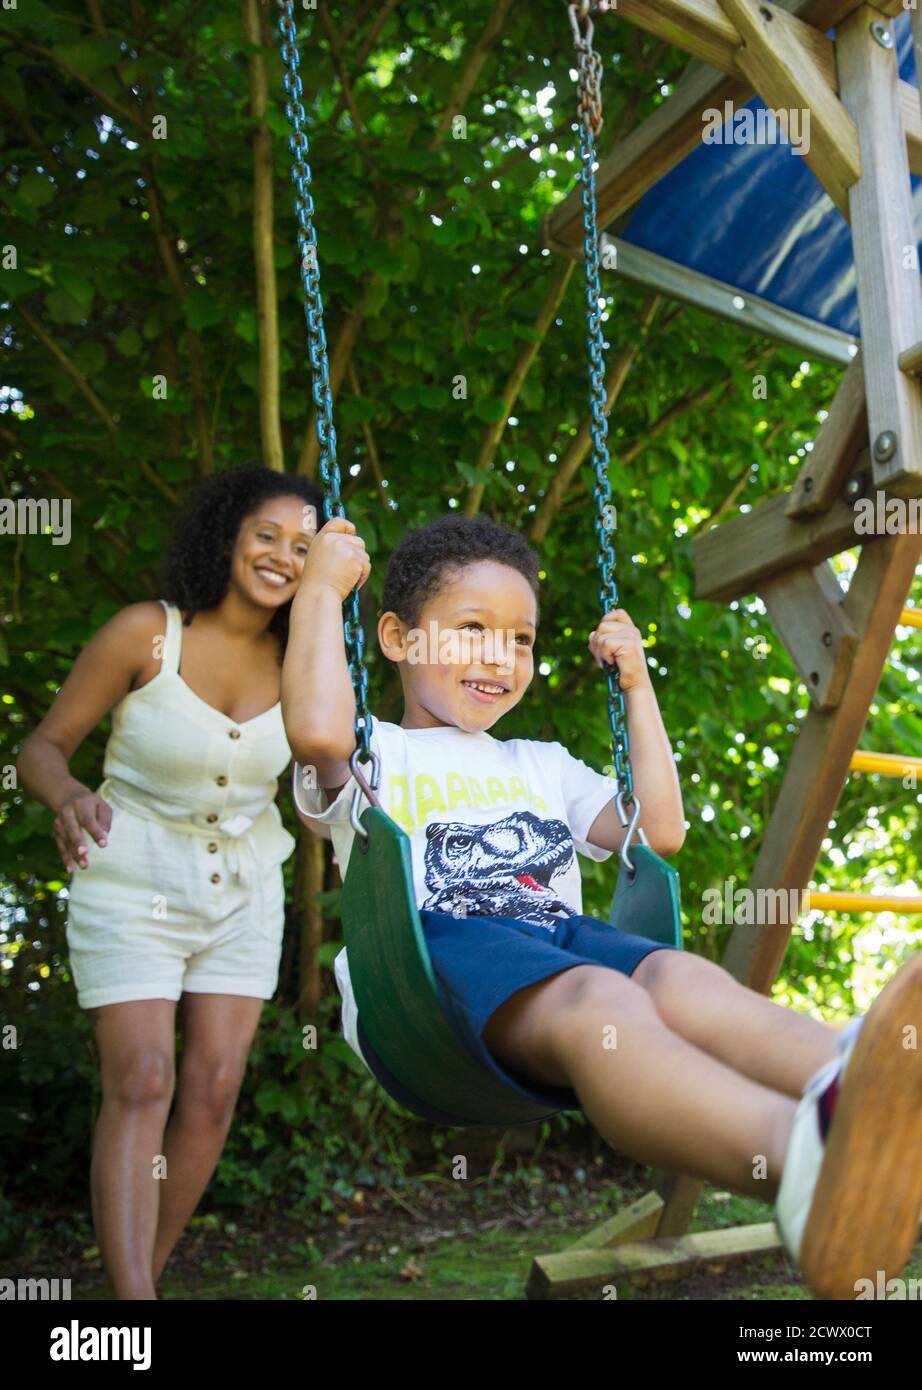 Mother pushing son on swing set in summer backyard Stock Photo